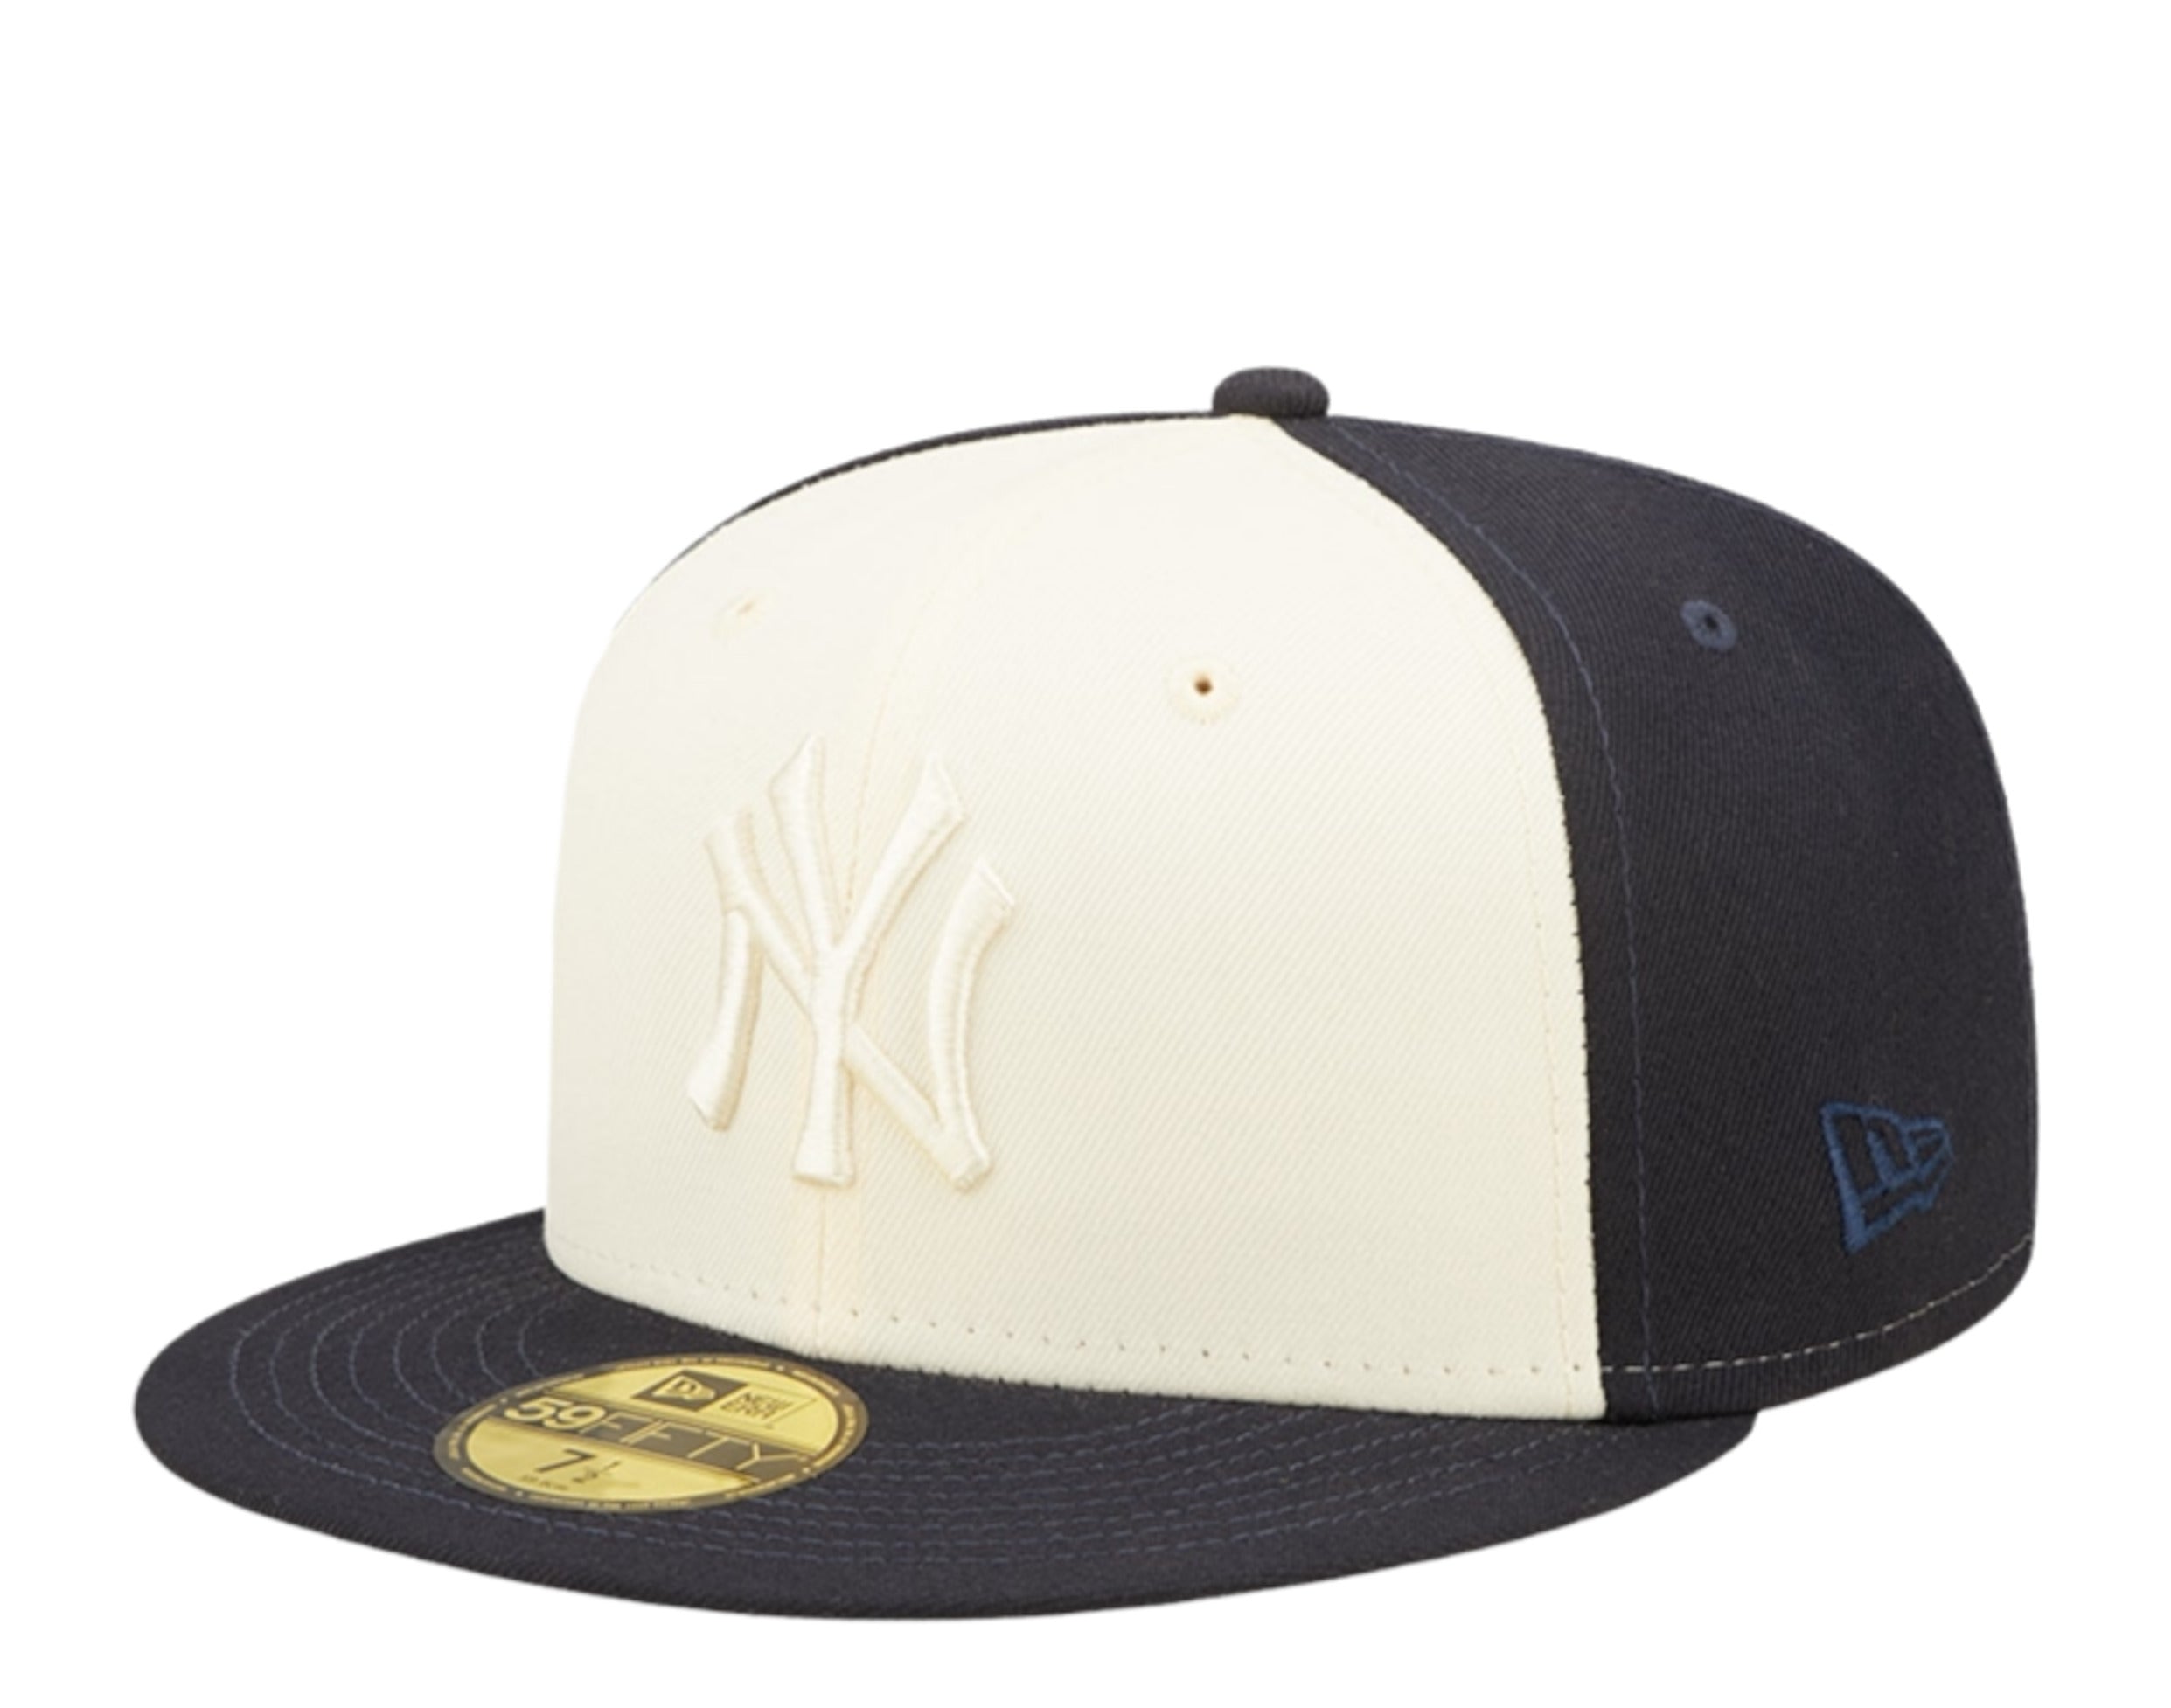 New York Yankees Hat Baseball Cap Fitted 7 1/2 New Era Red Black MLB Retro  NYY